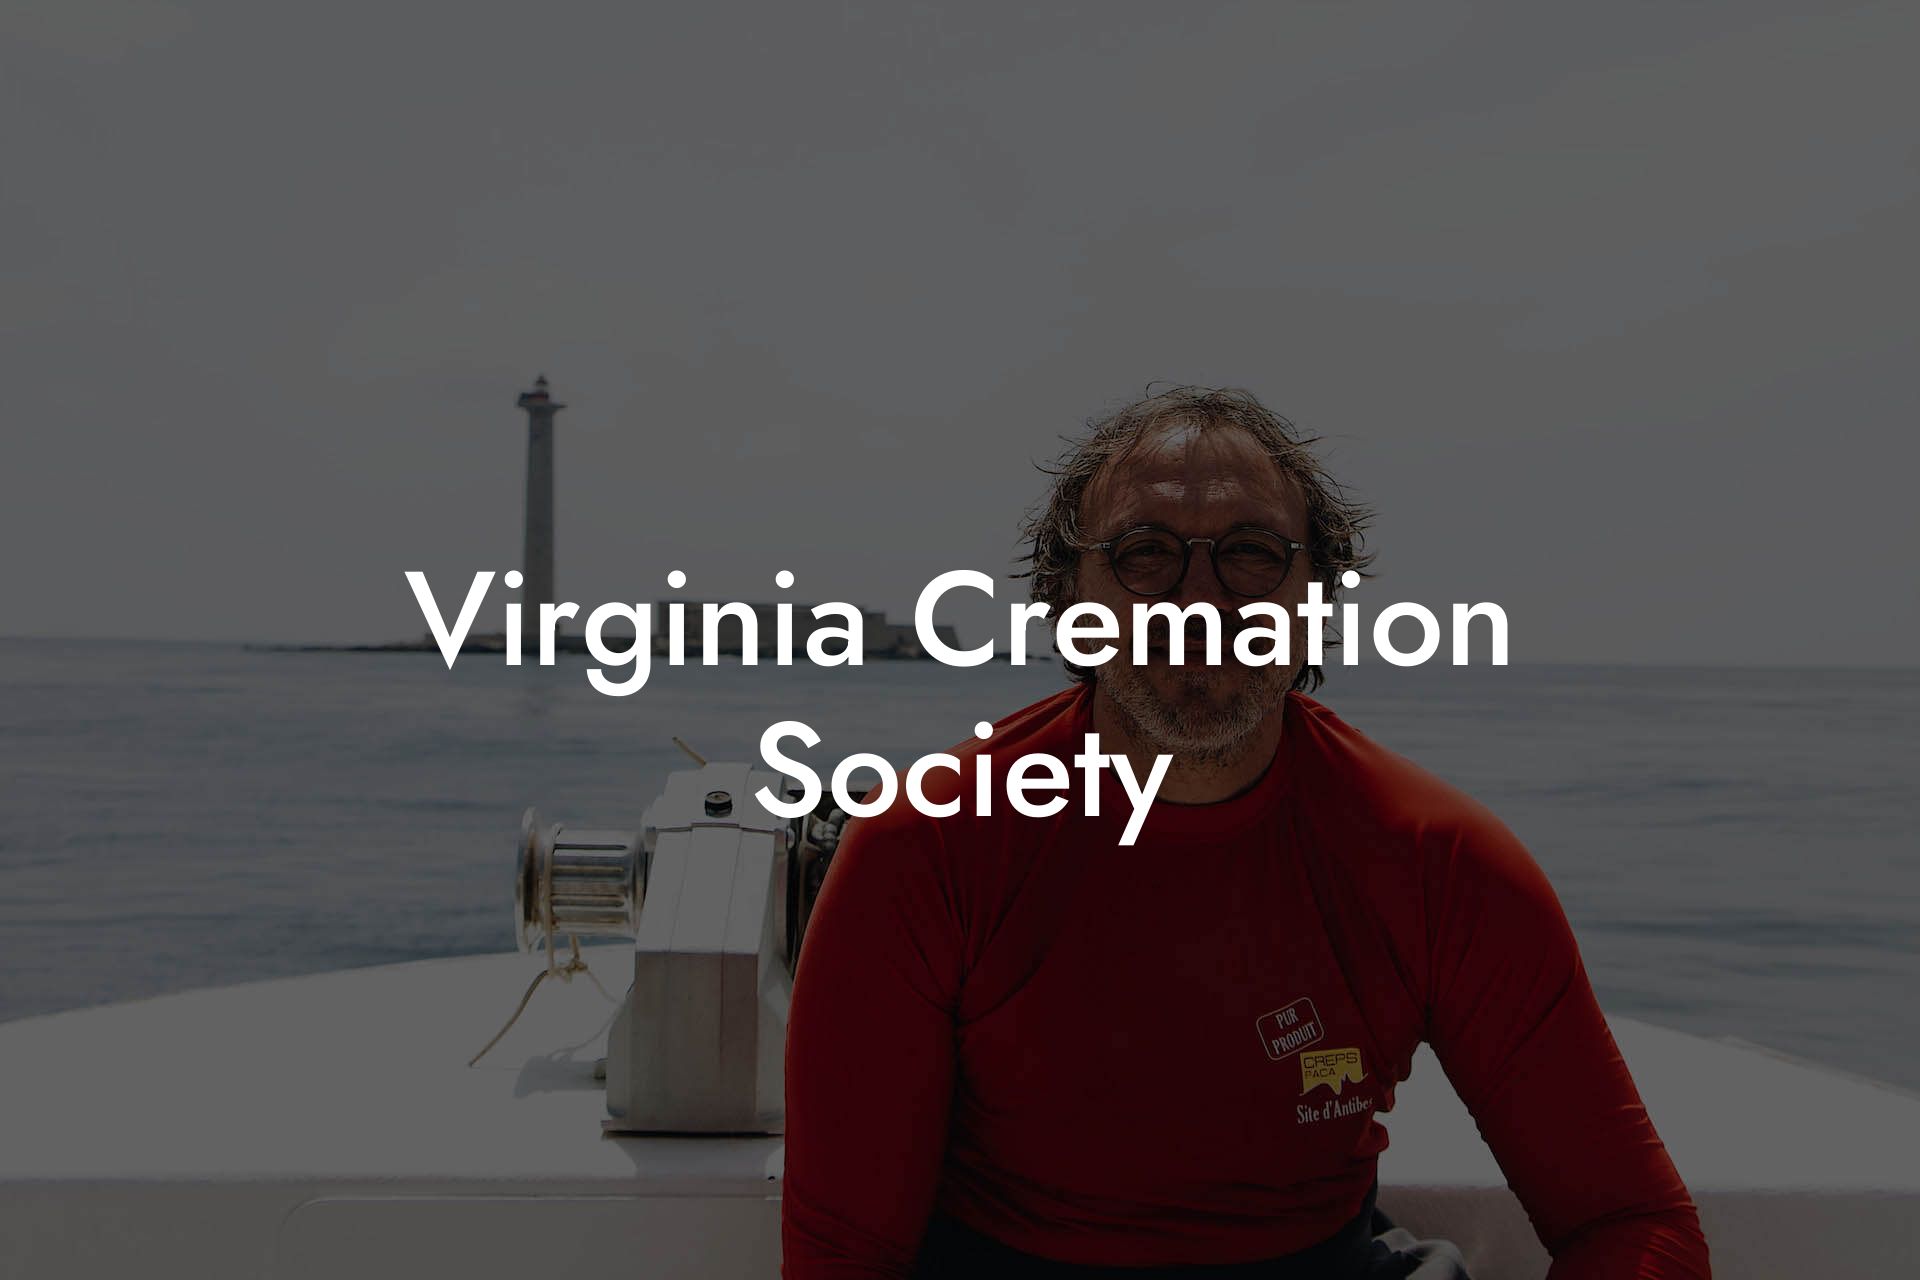 Virginia Cremation Society